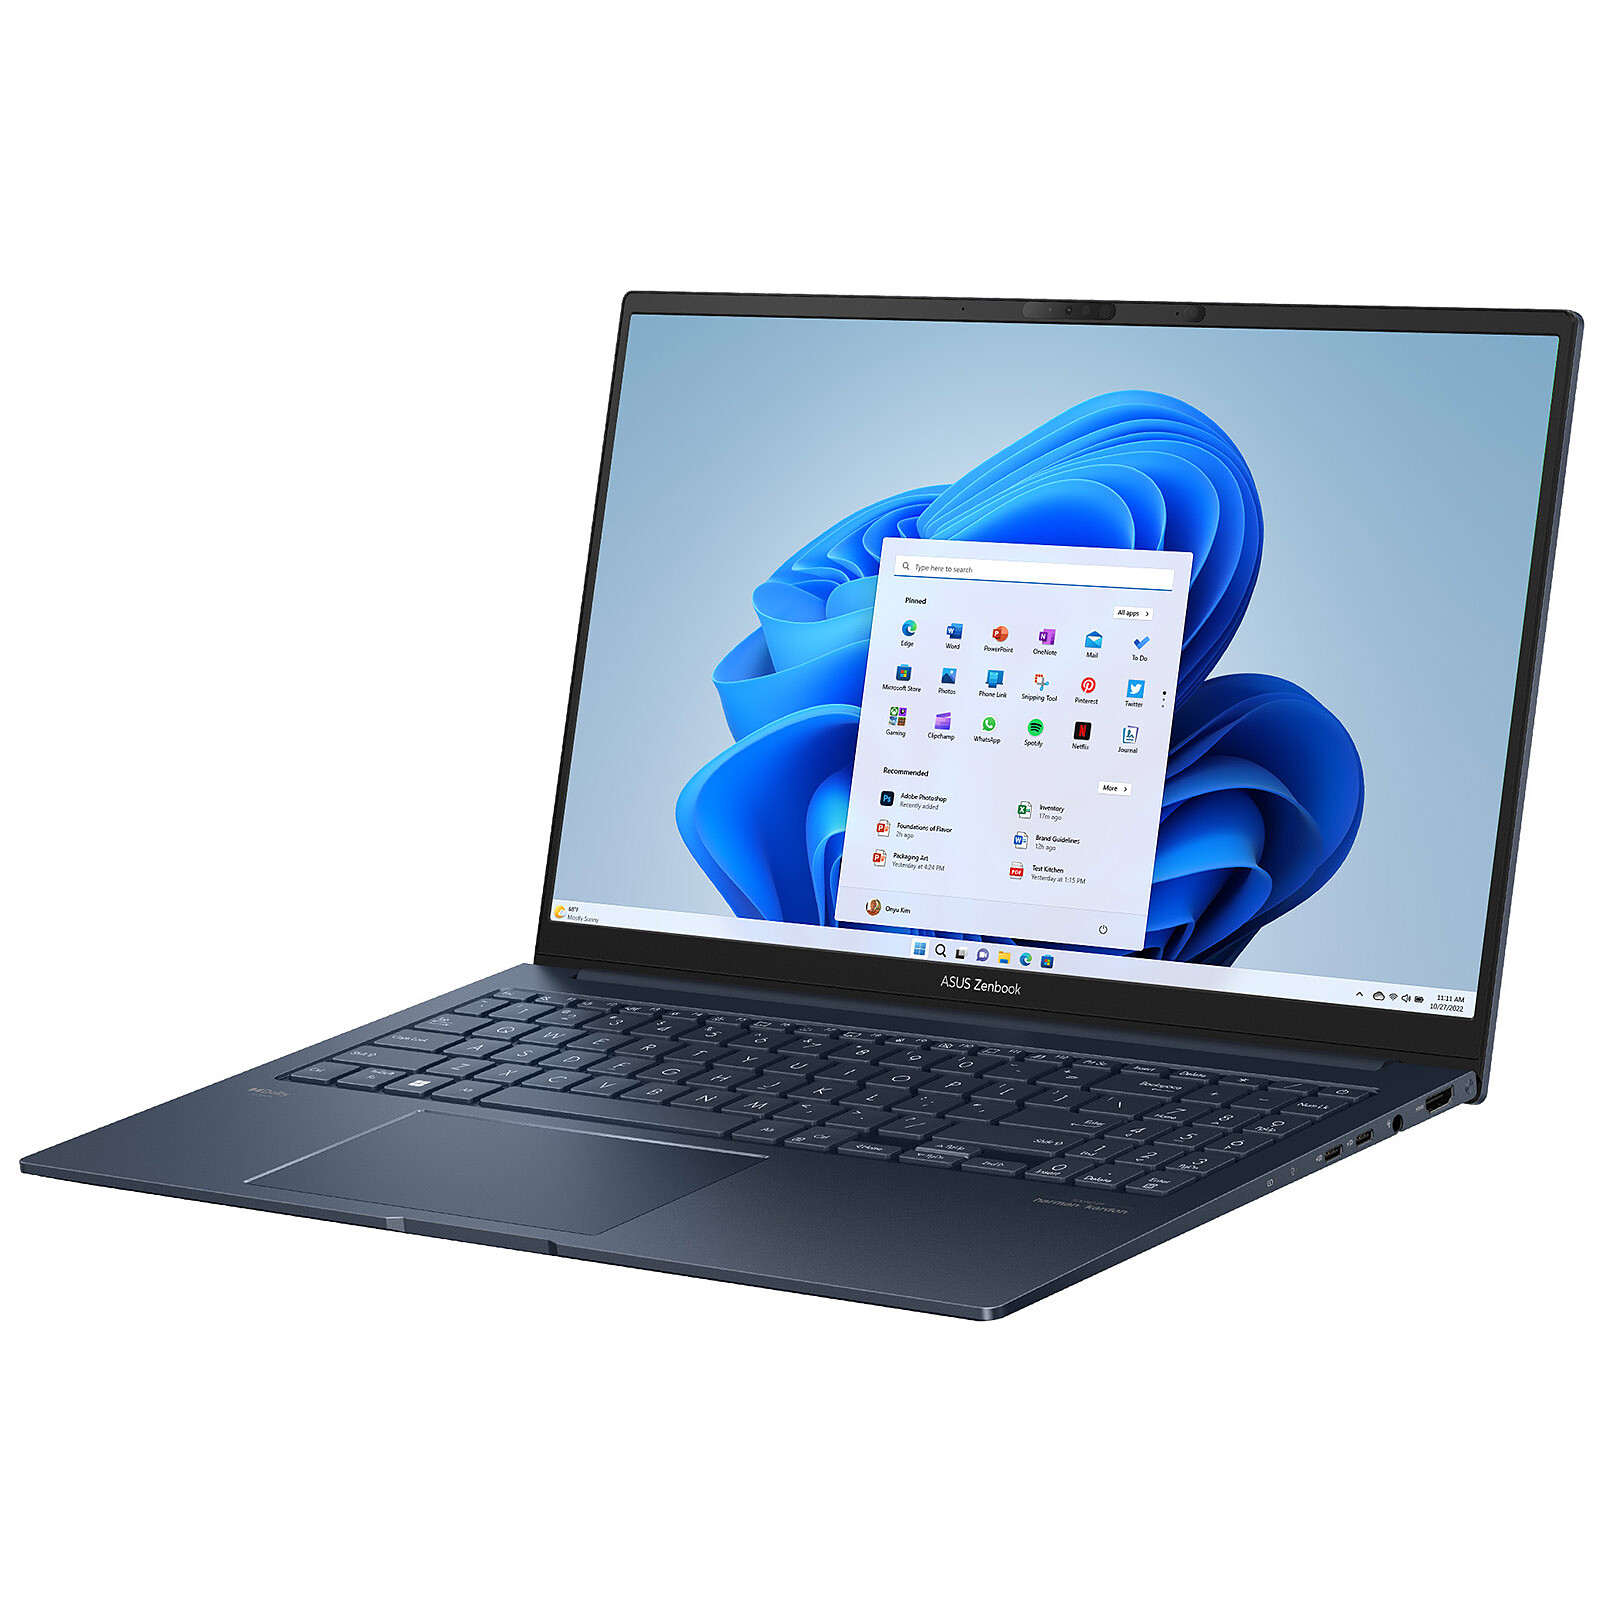 Asus ZenBook 15 review